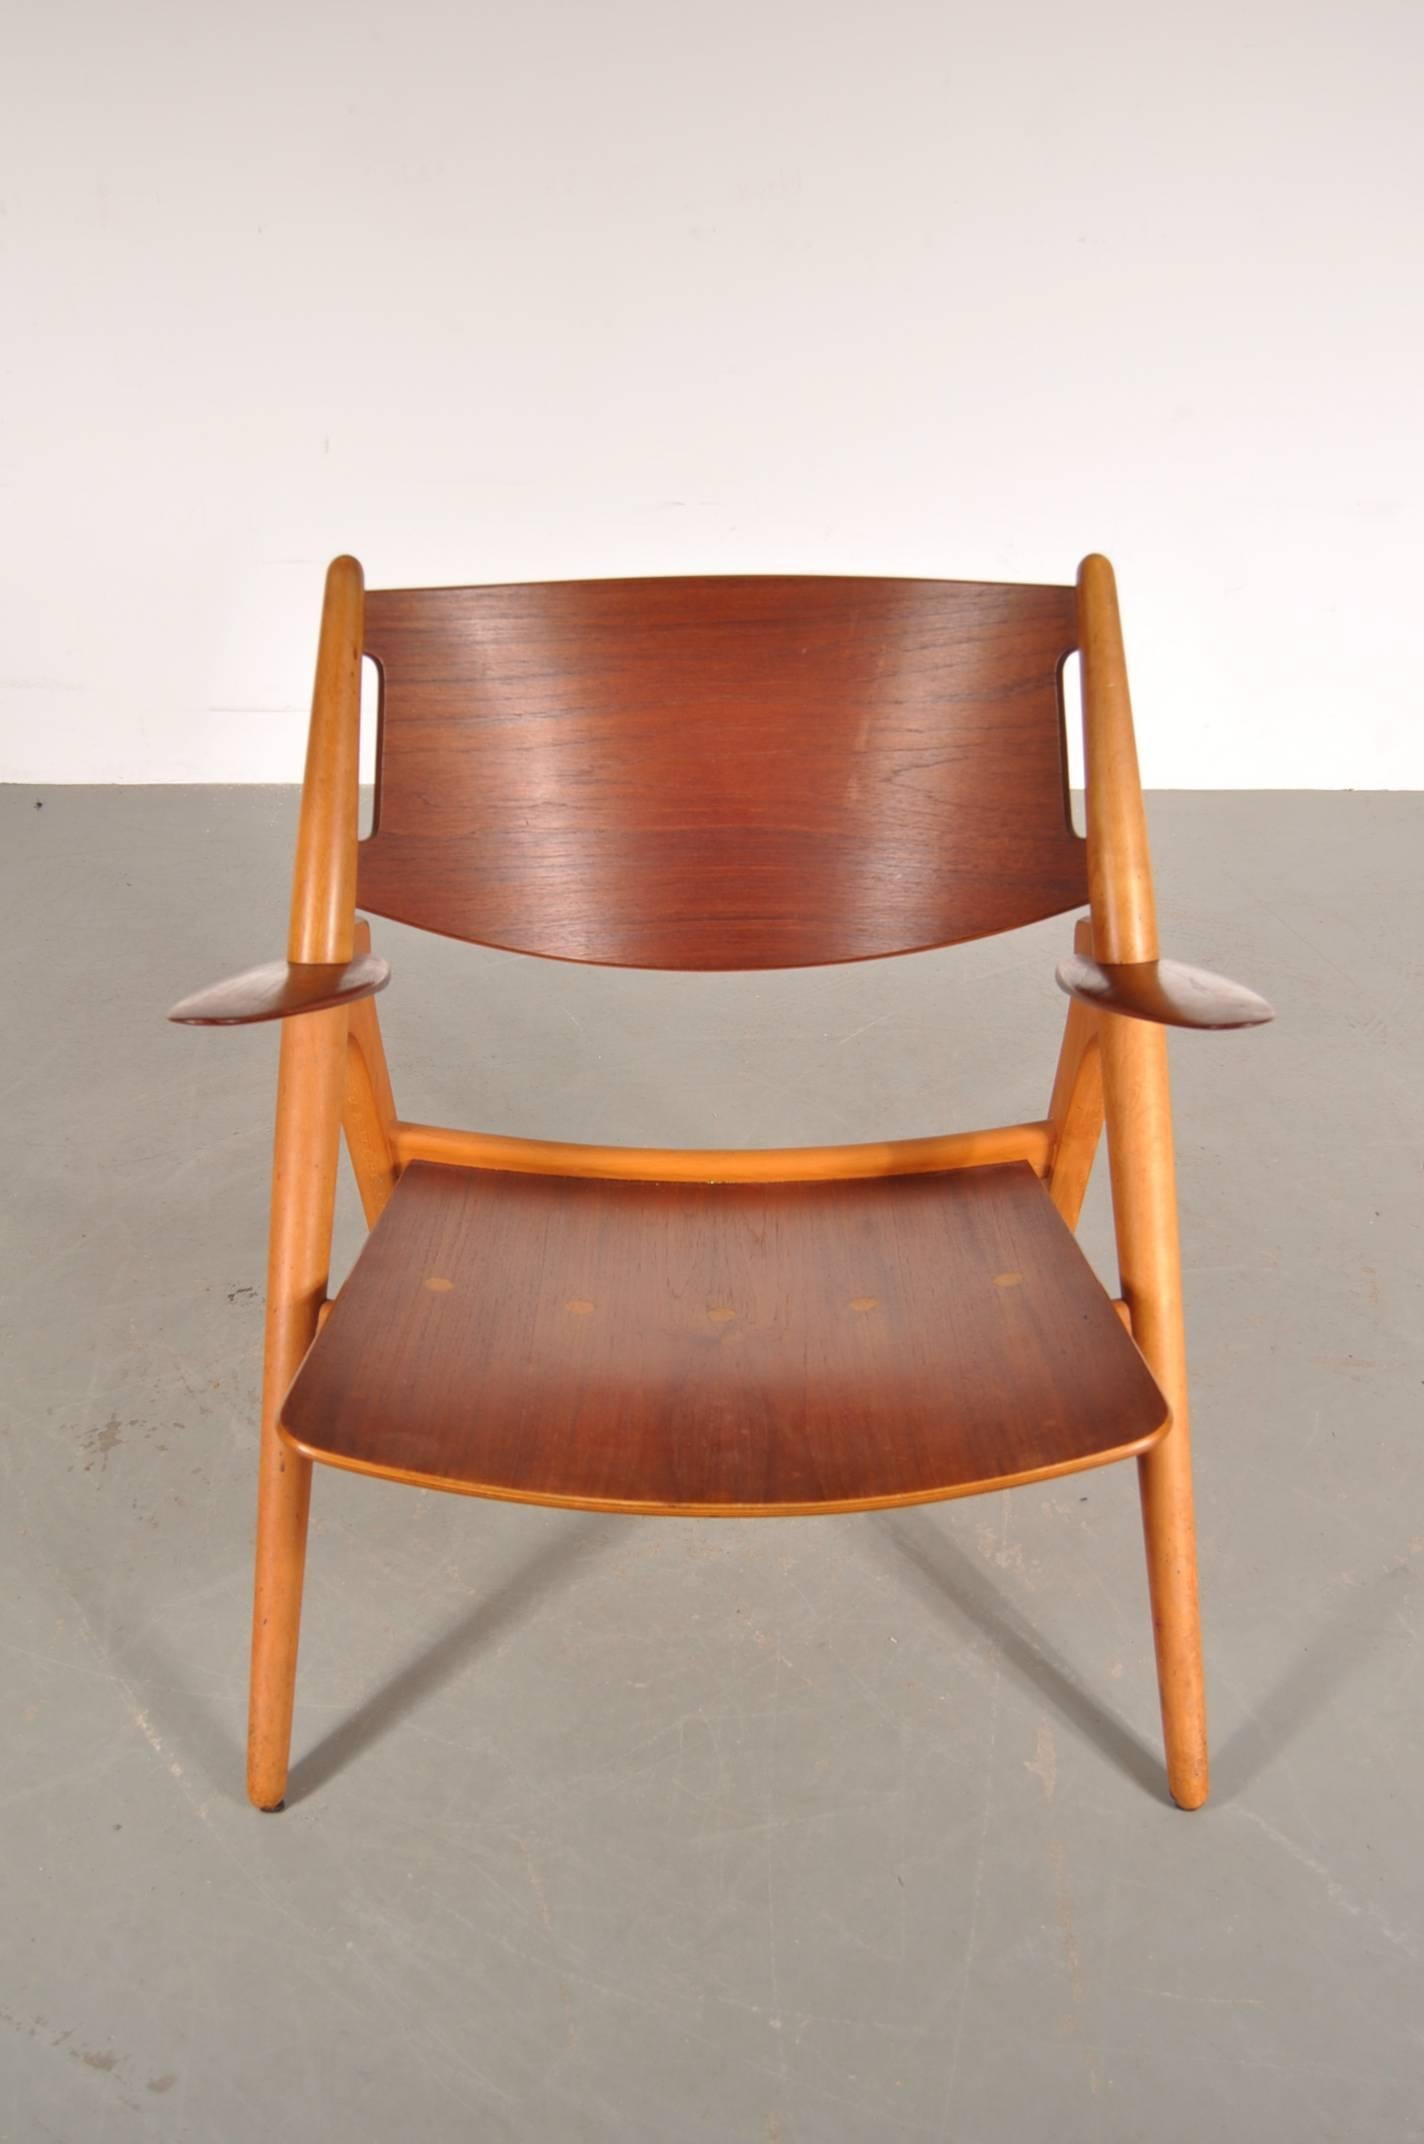 Mid-20th Century Sawbuck Easy Chair by Hans J. Wegner for Carl Hansen & Son, Denmark, circa 1951